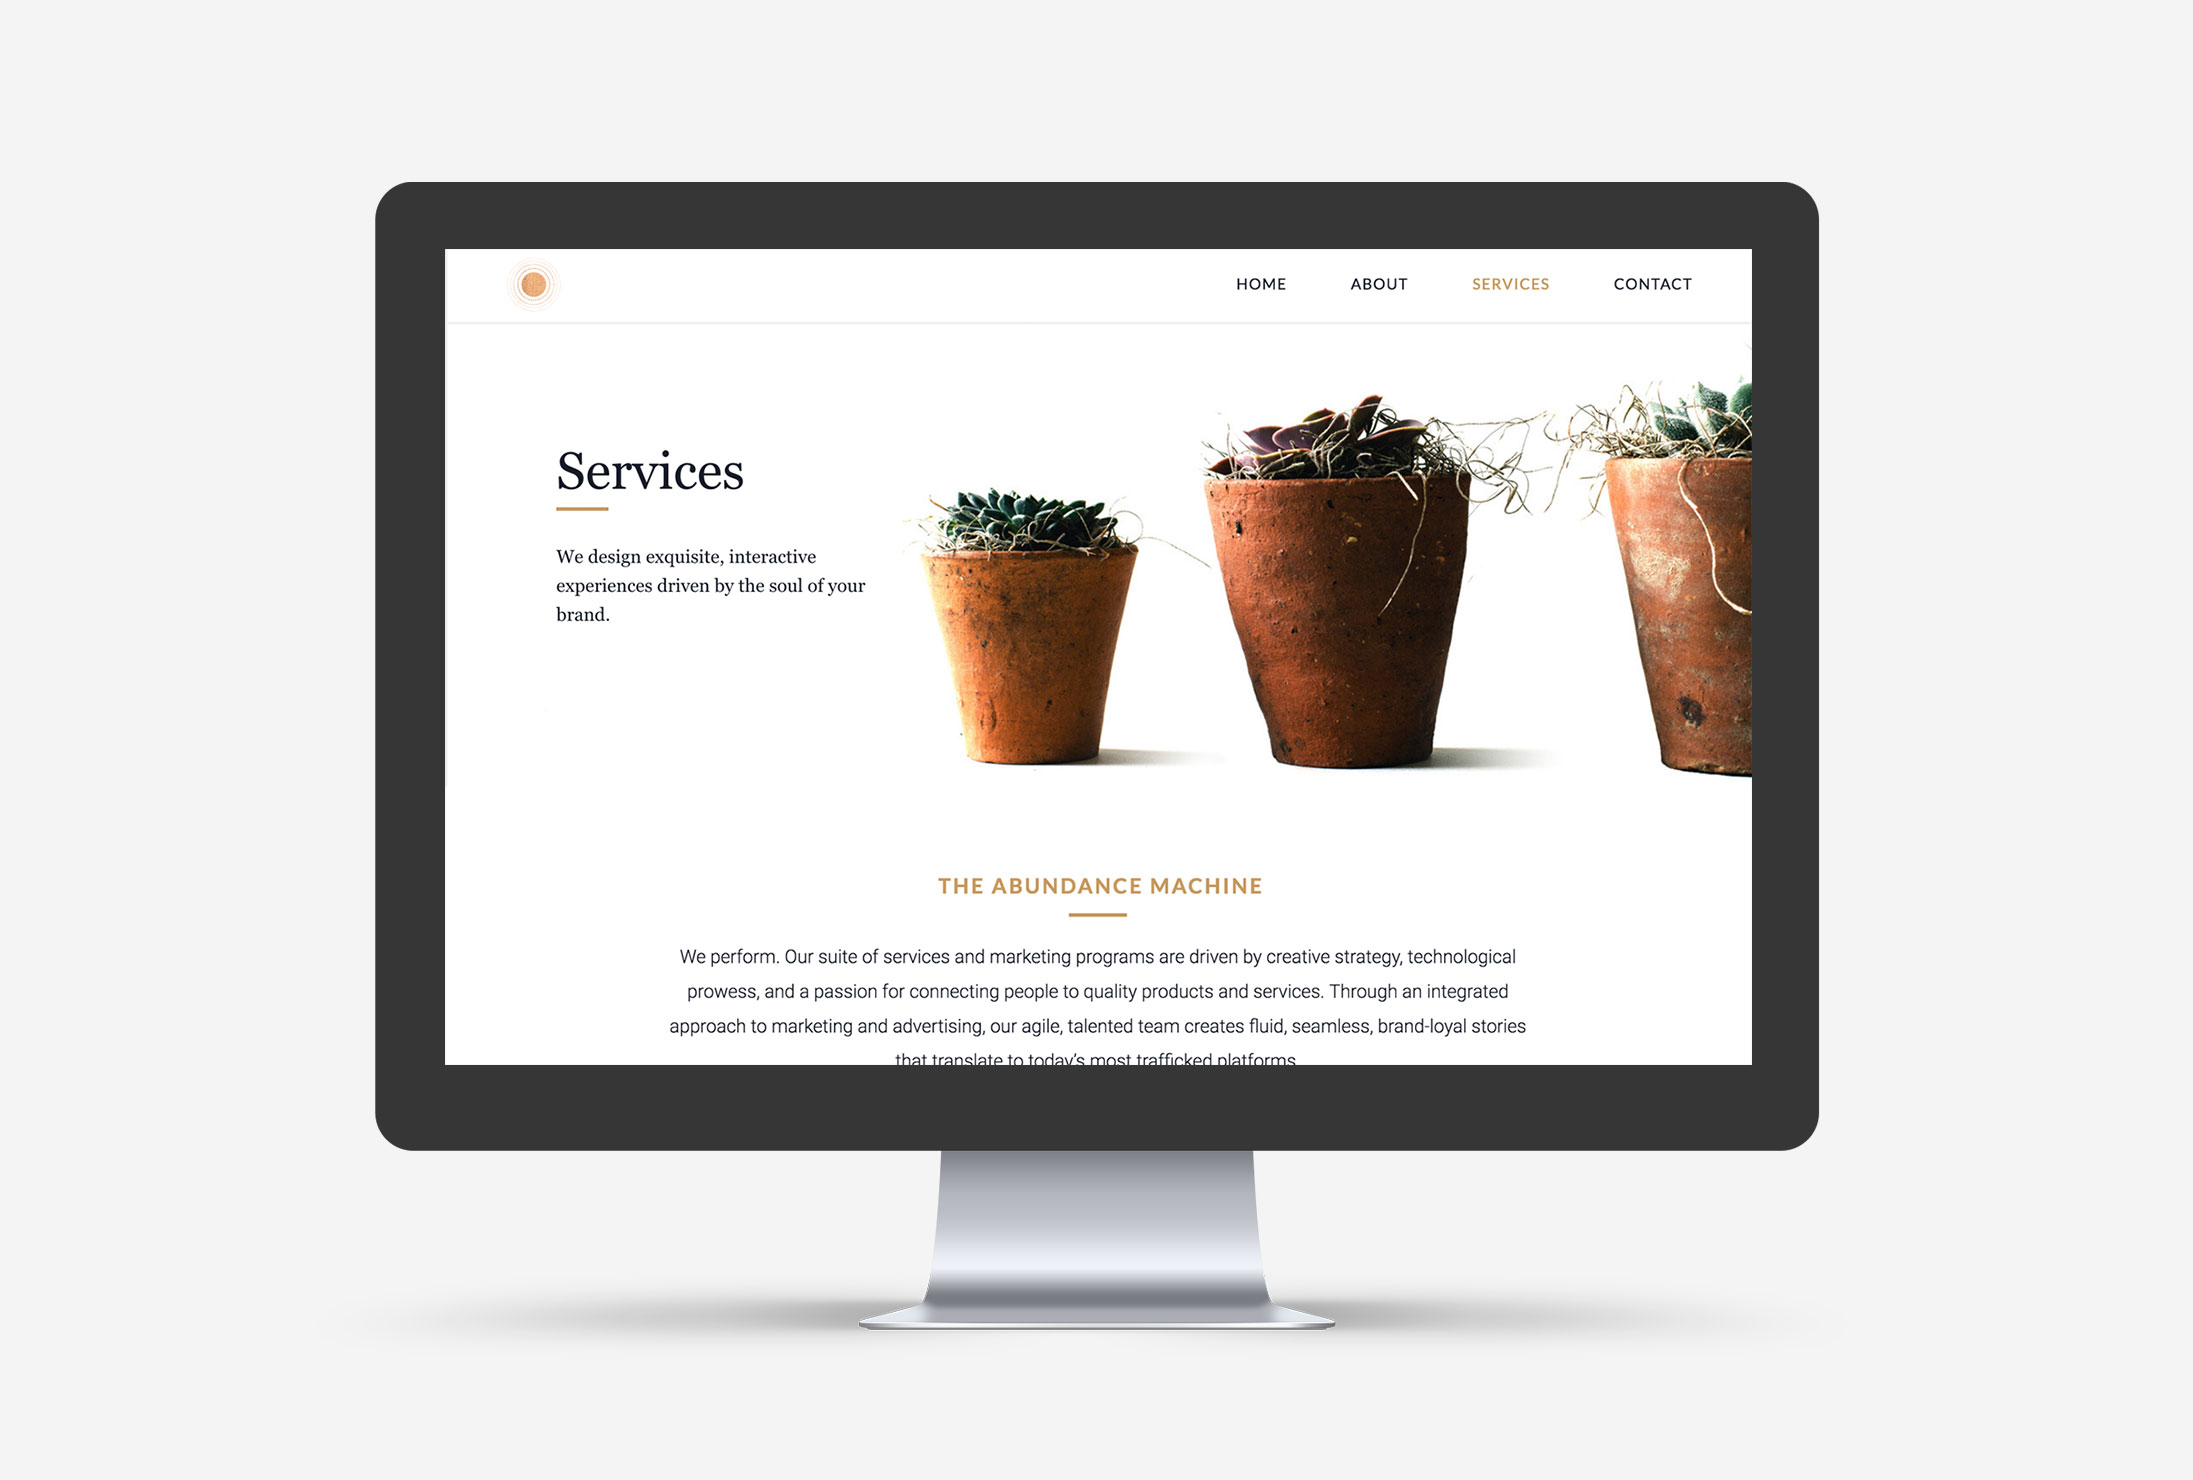 Sunbeam Communications Small Business WordPress Web Design